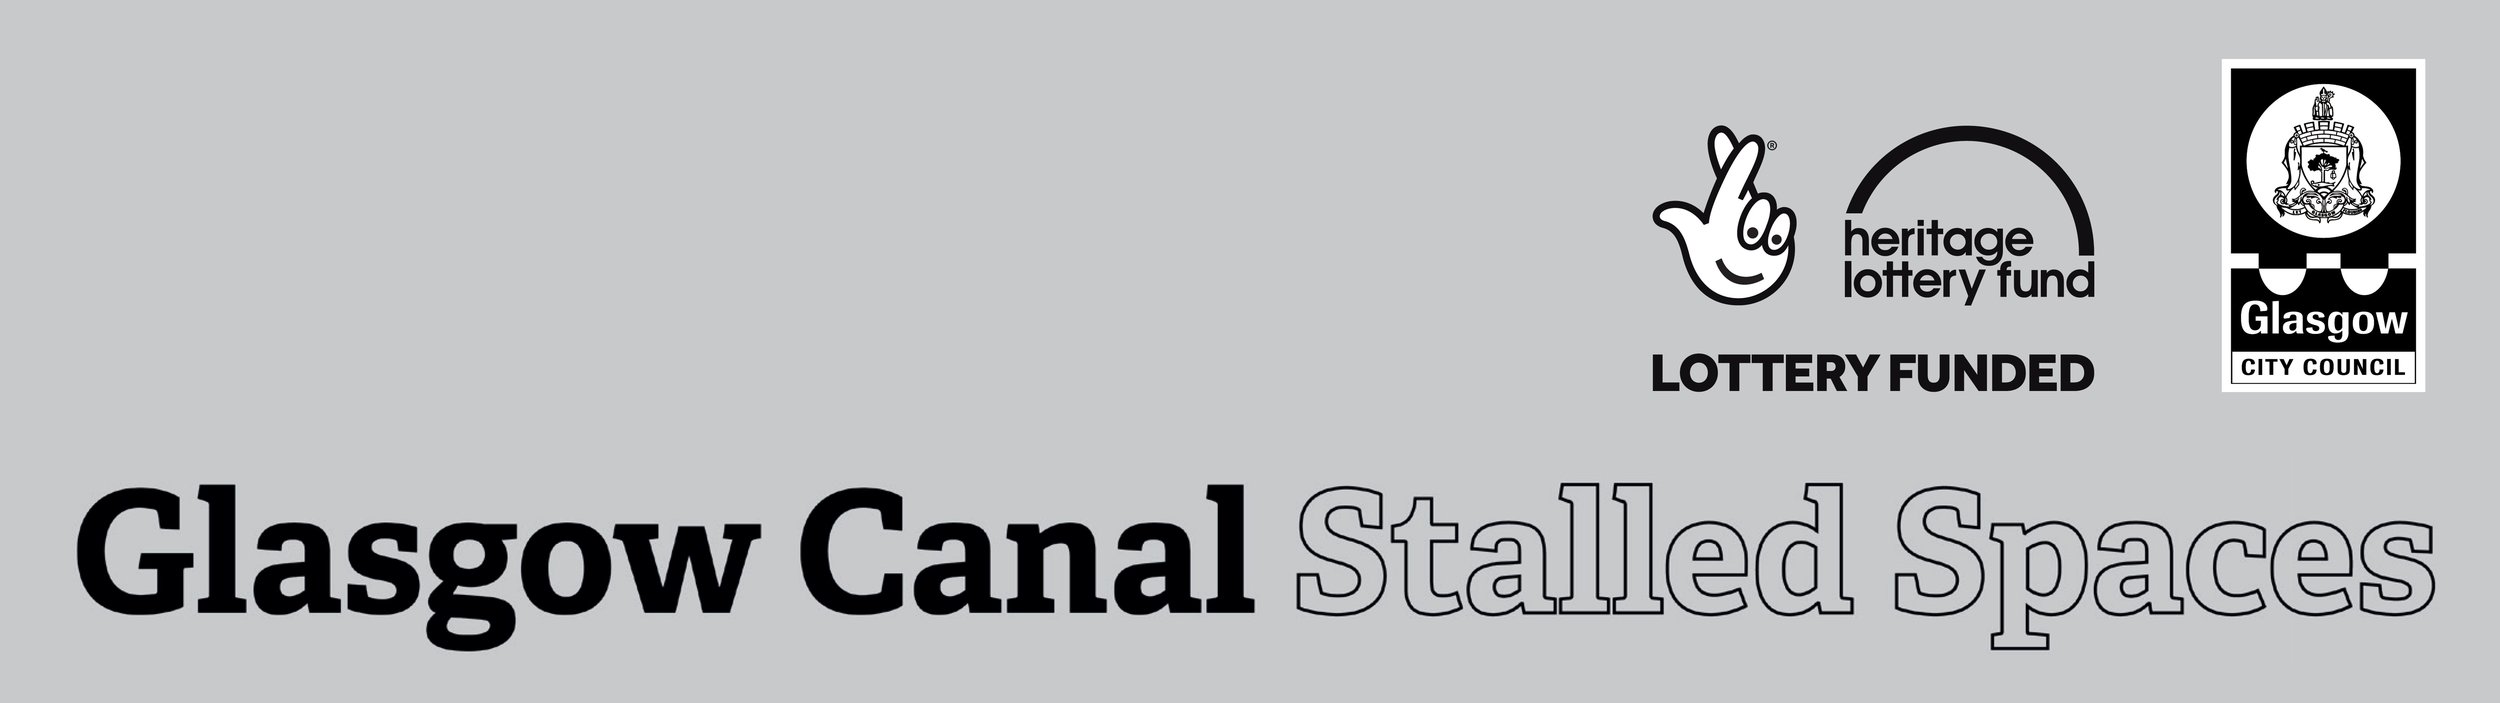 Canal SS Logo.jpg